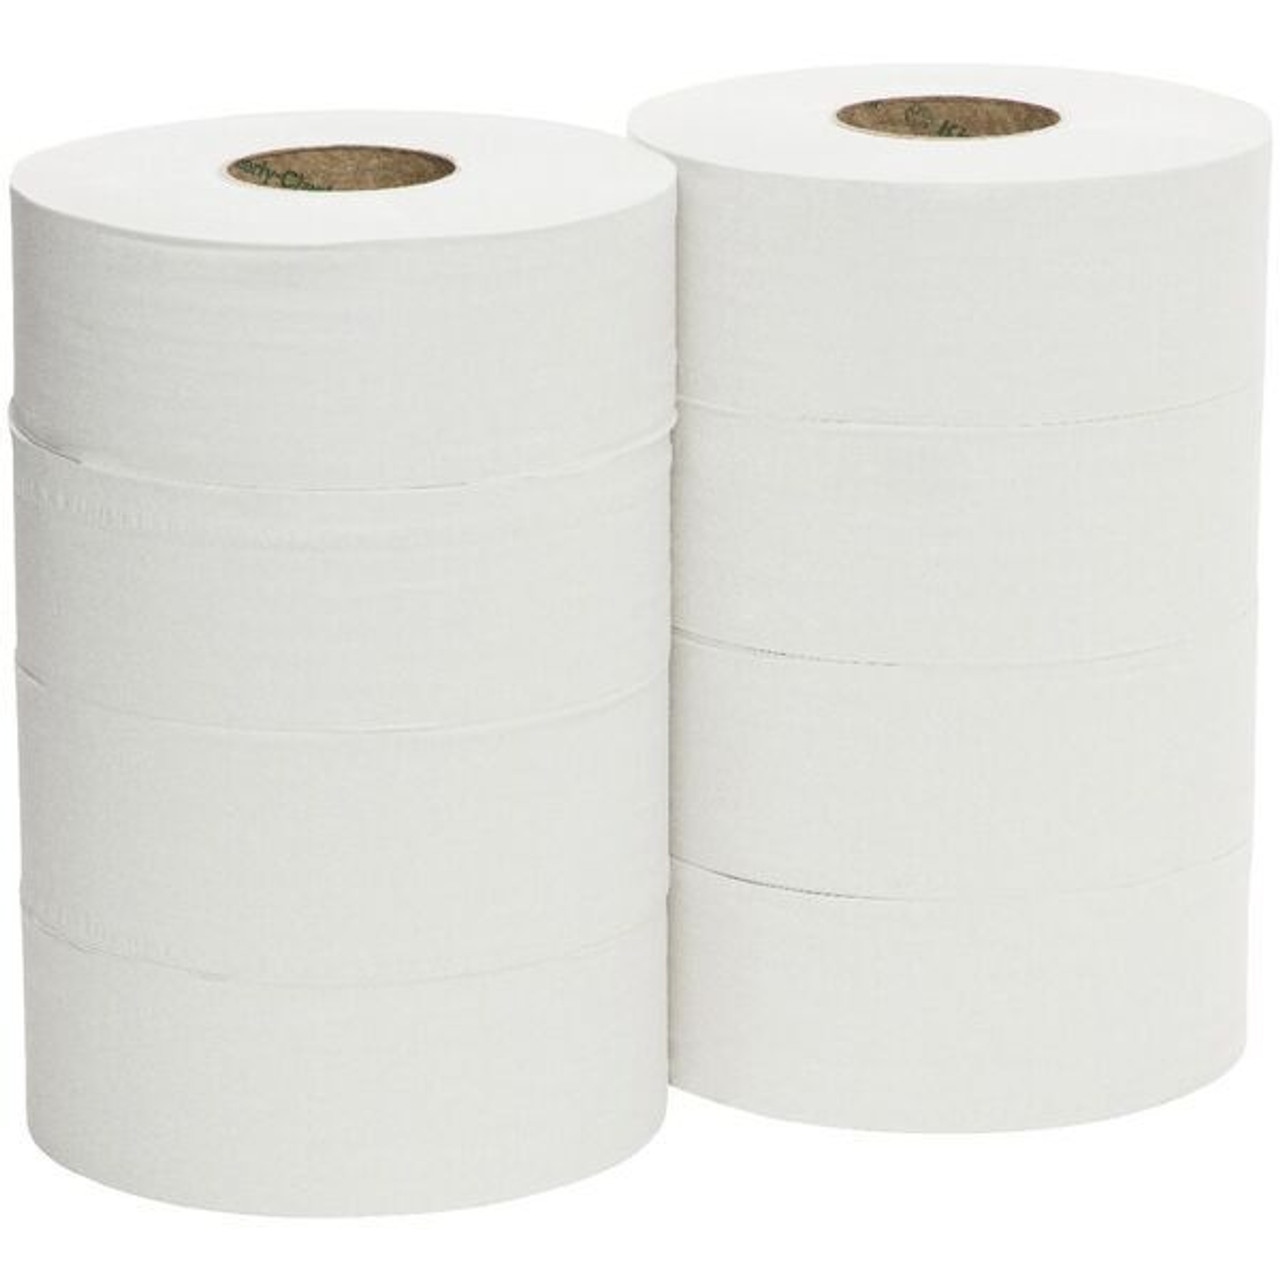 Calibre Jumbo Toilet Paper Roll